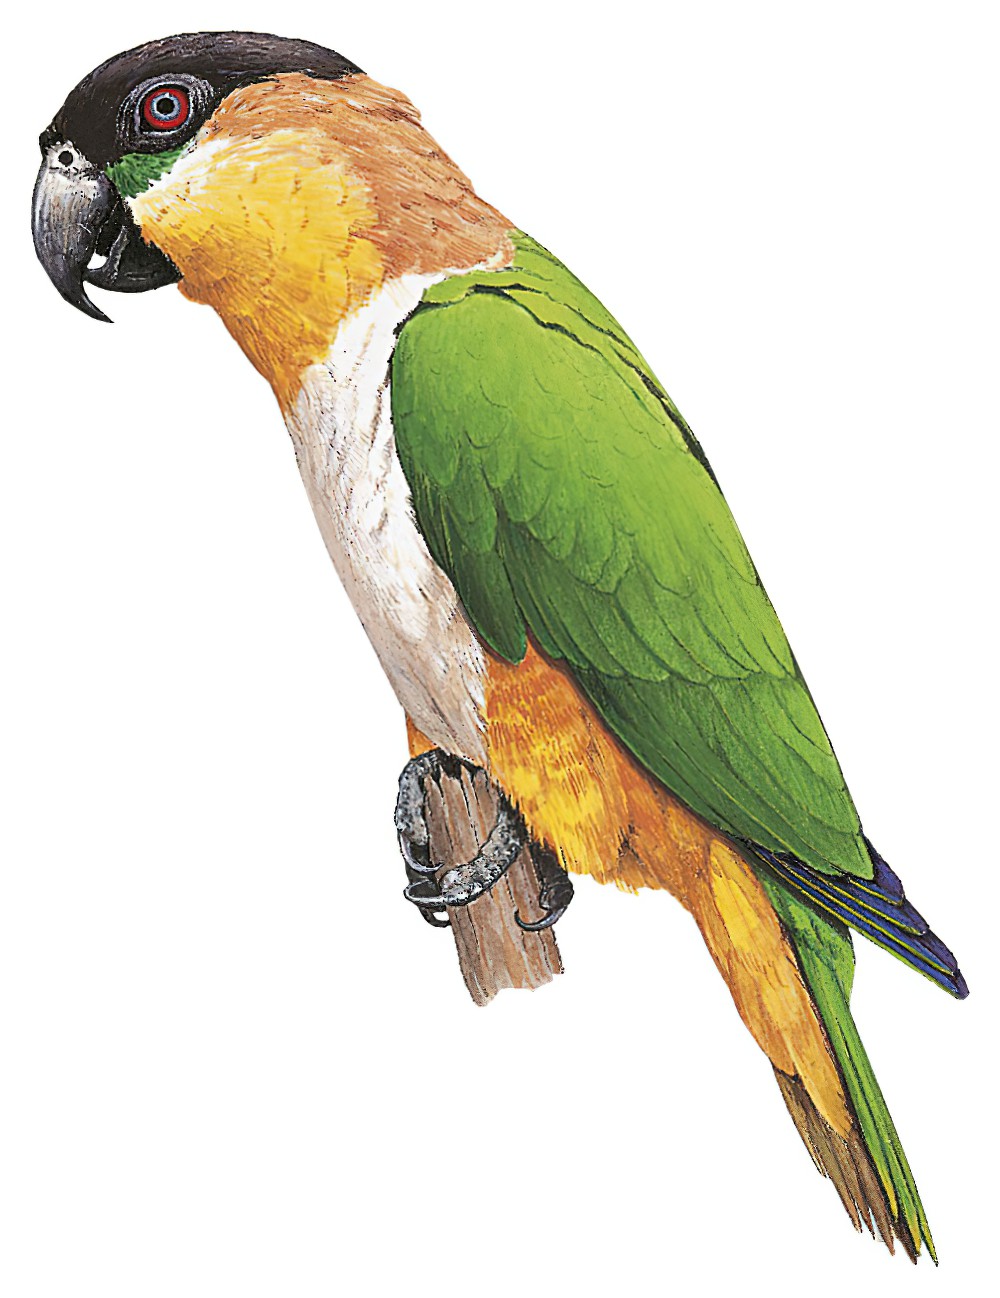 Black-headed Parrot / Pionites melanocephalus